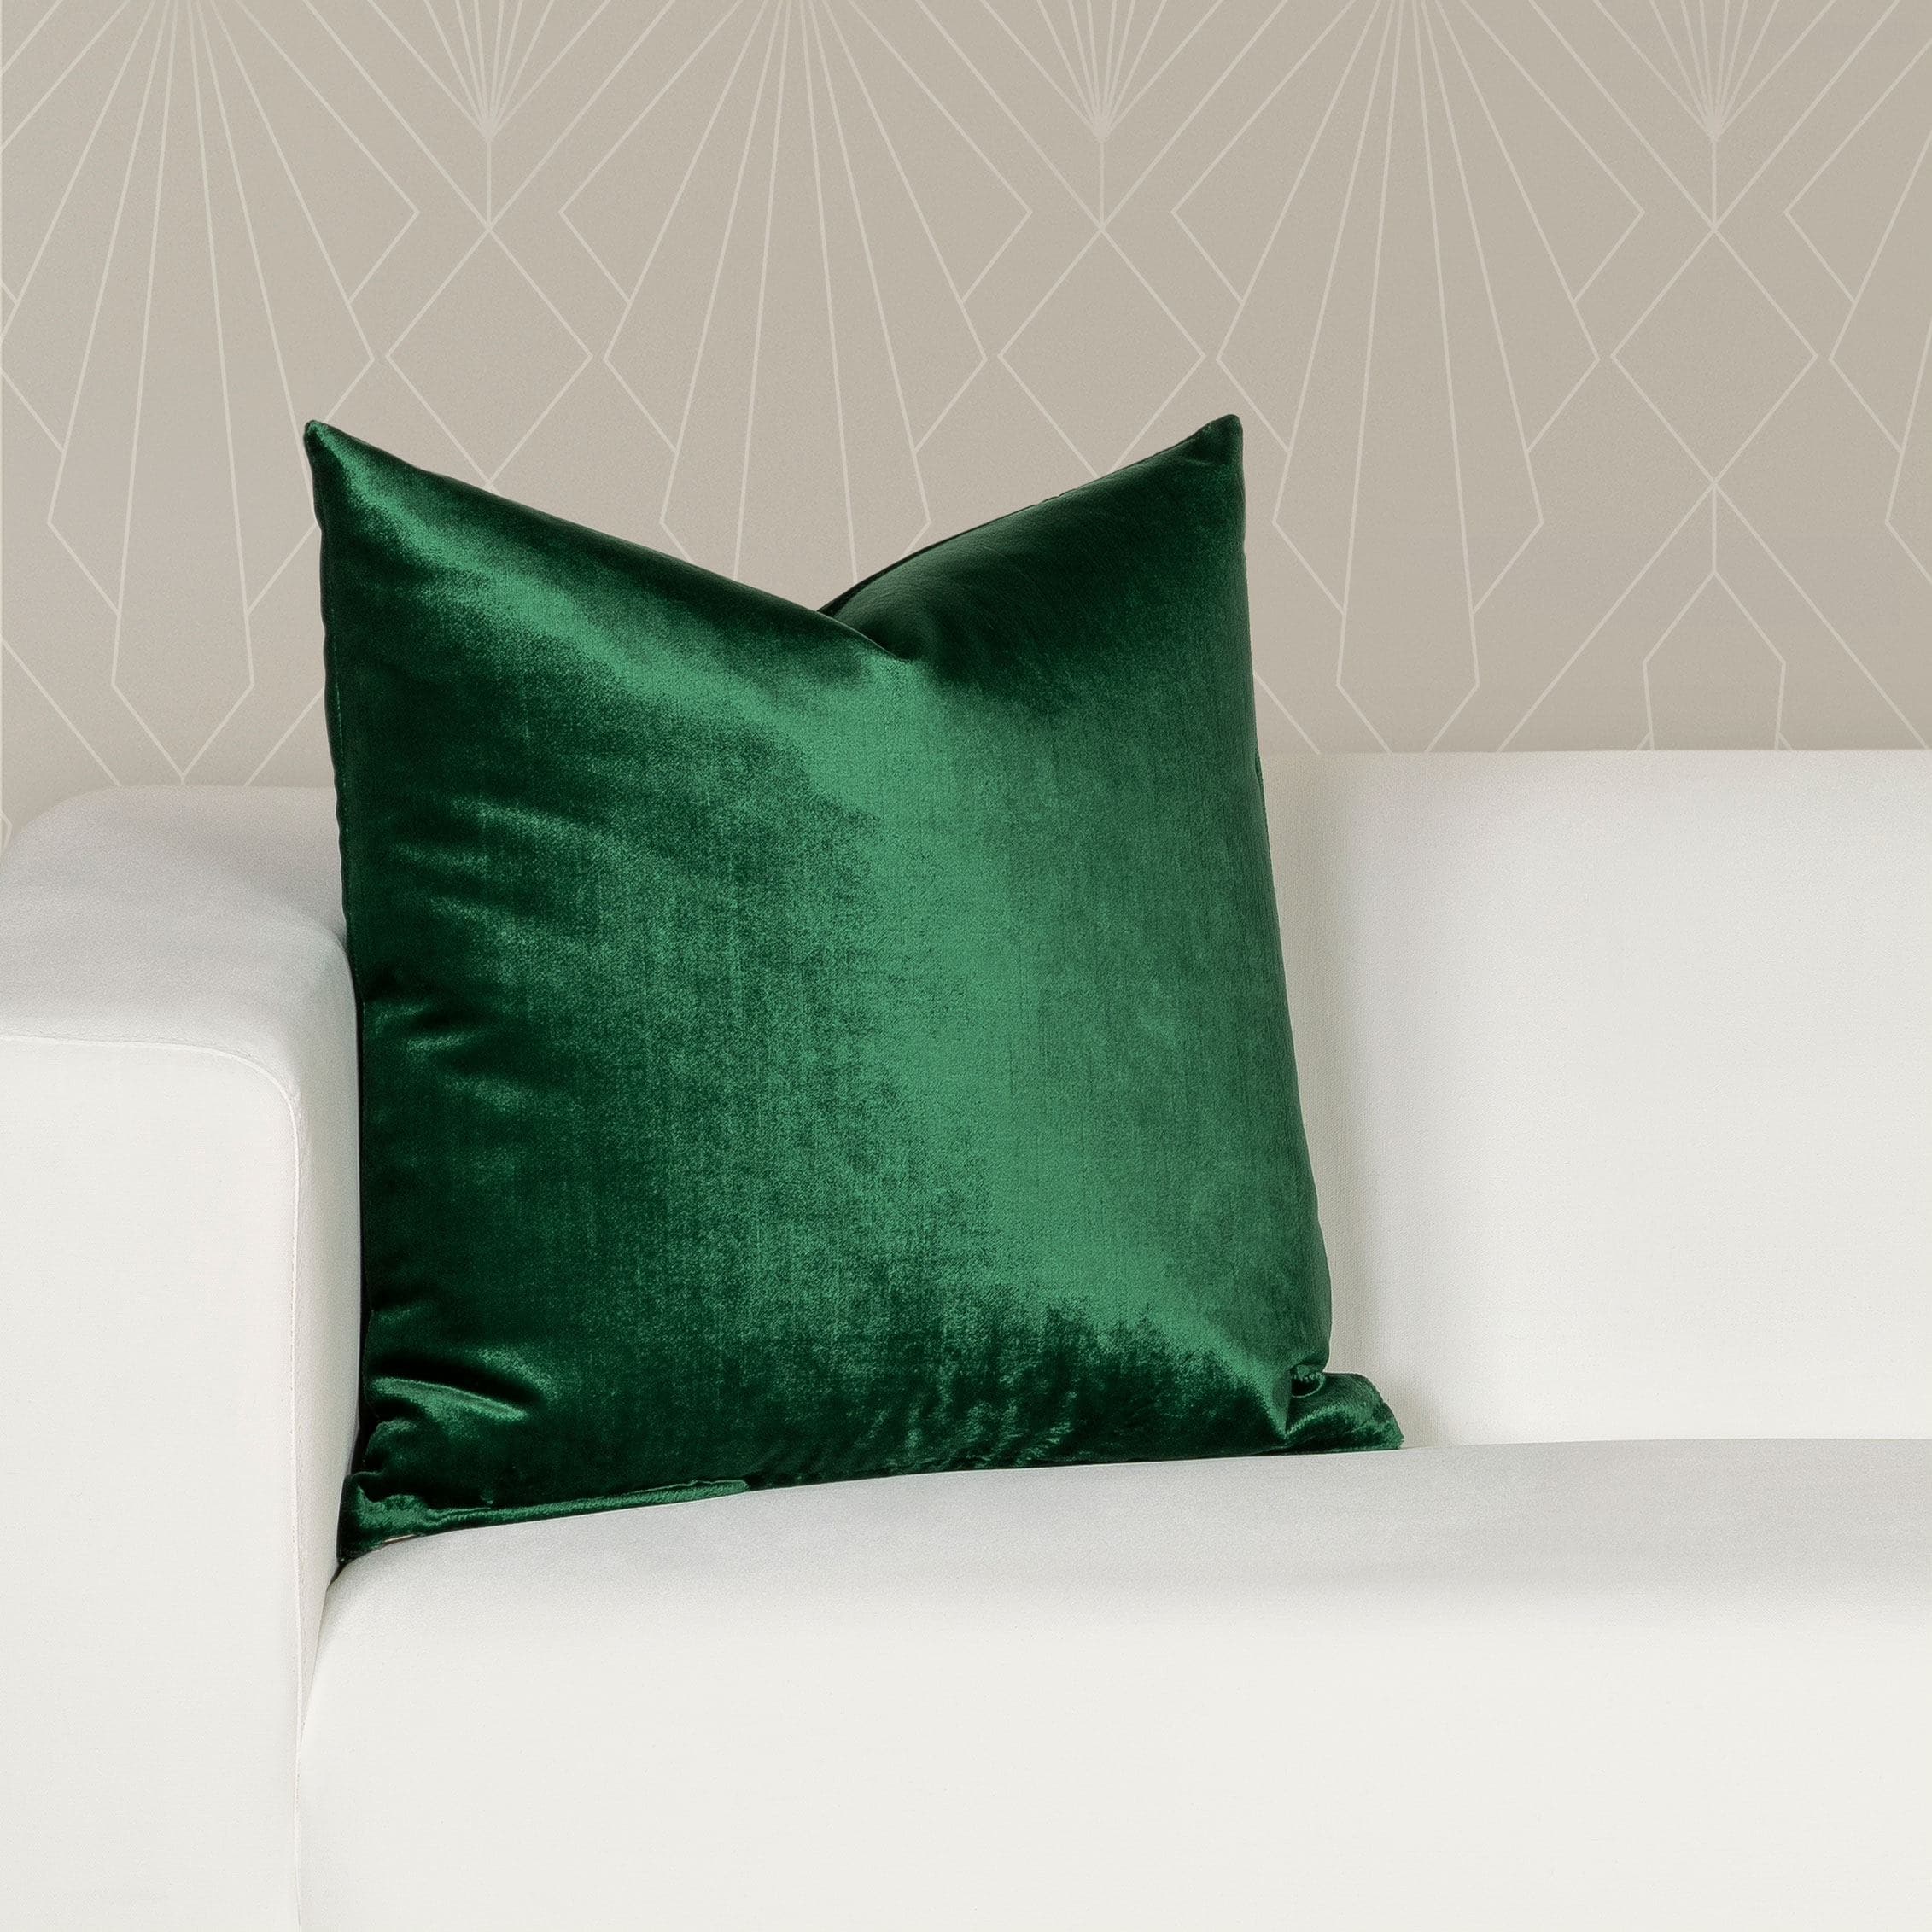 F Scott Fitzgerald 'Golden Hours' Washable Velvet Throw Pillow - On Sale -  Bed Bath & Beyond - 25580890